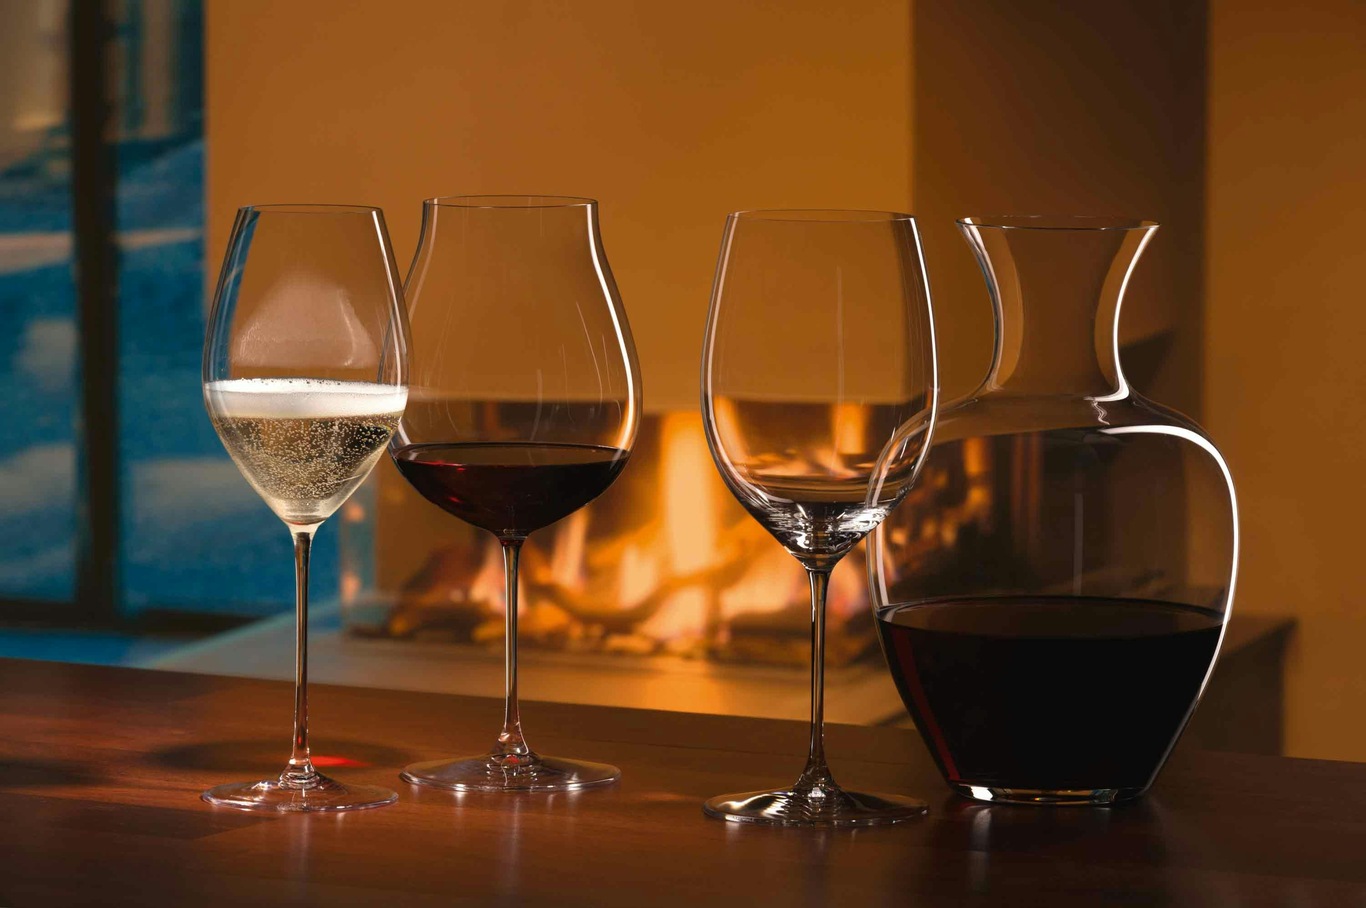 https://royaldesign.com/image/11/riedel-veritas-wine-glass-new-world-pinot-noir-2-pcs-1?w=800&quality=80